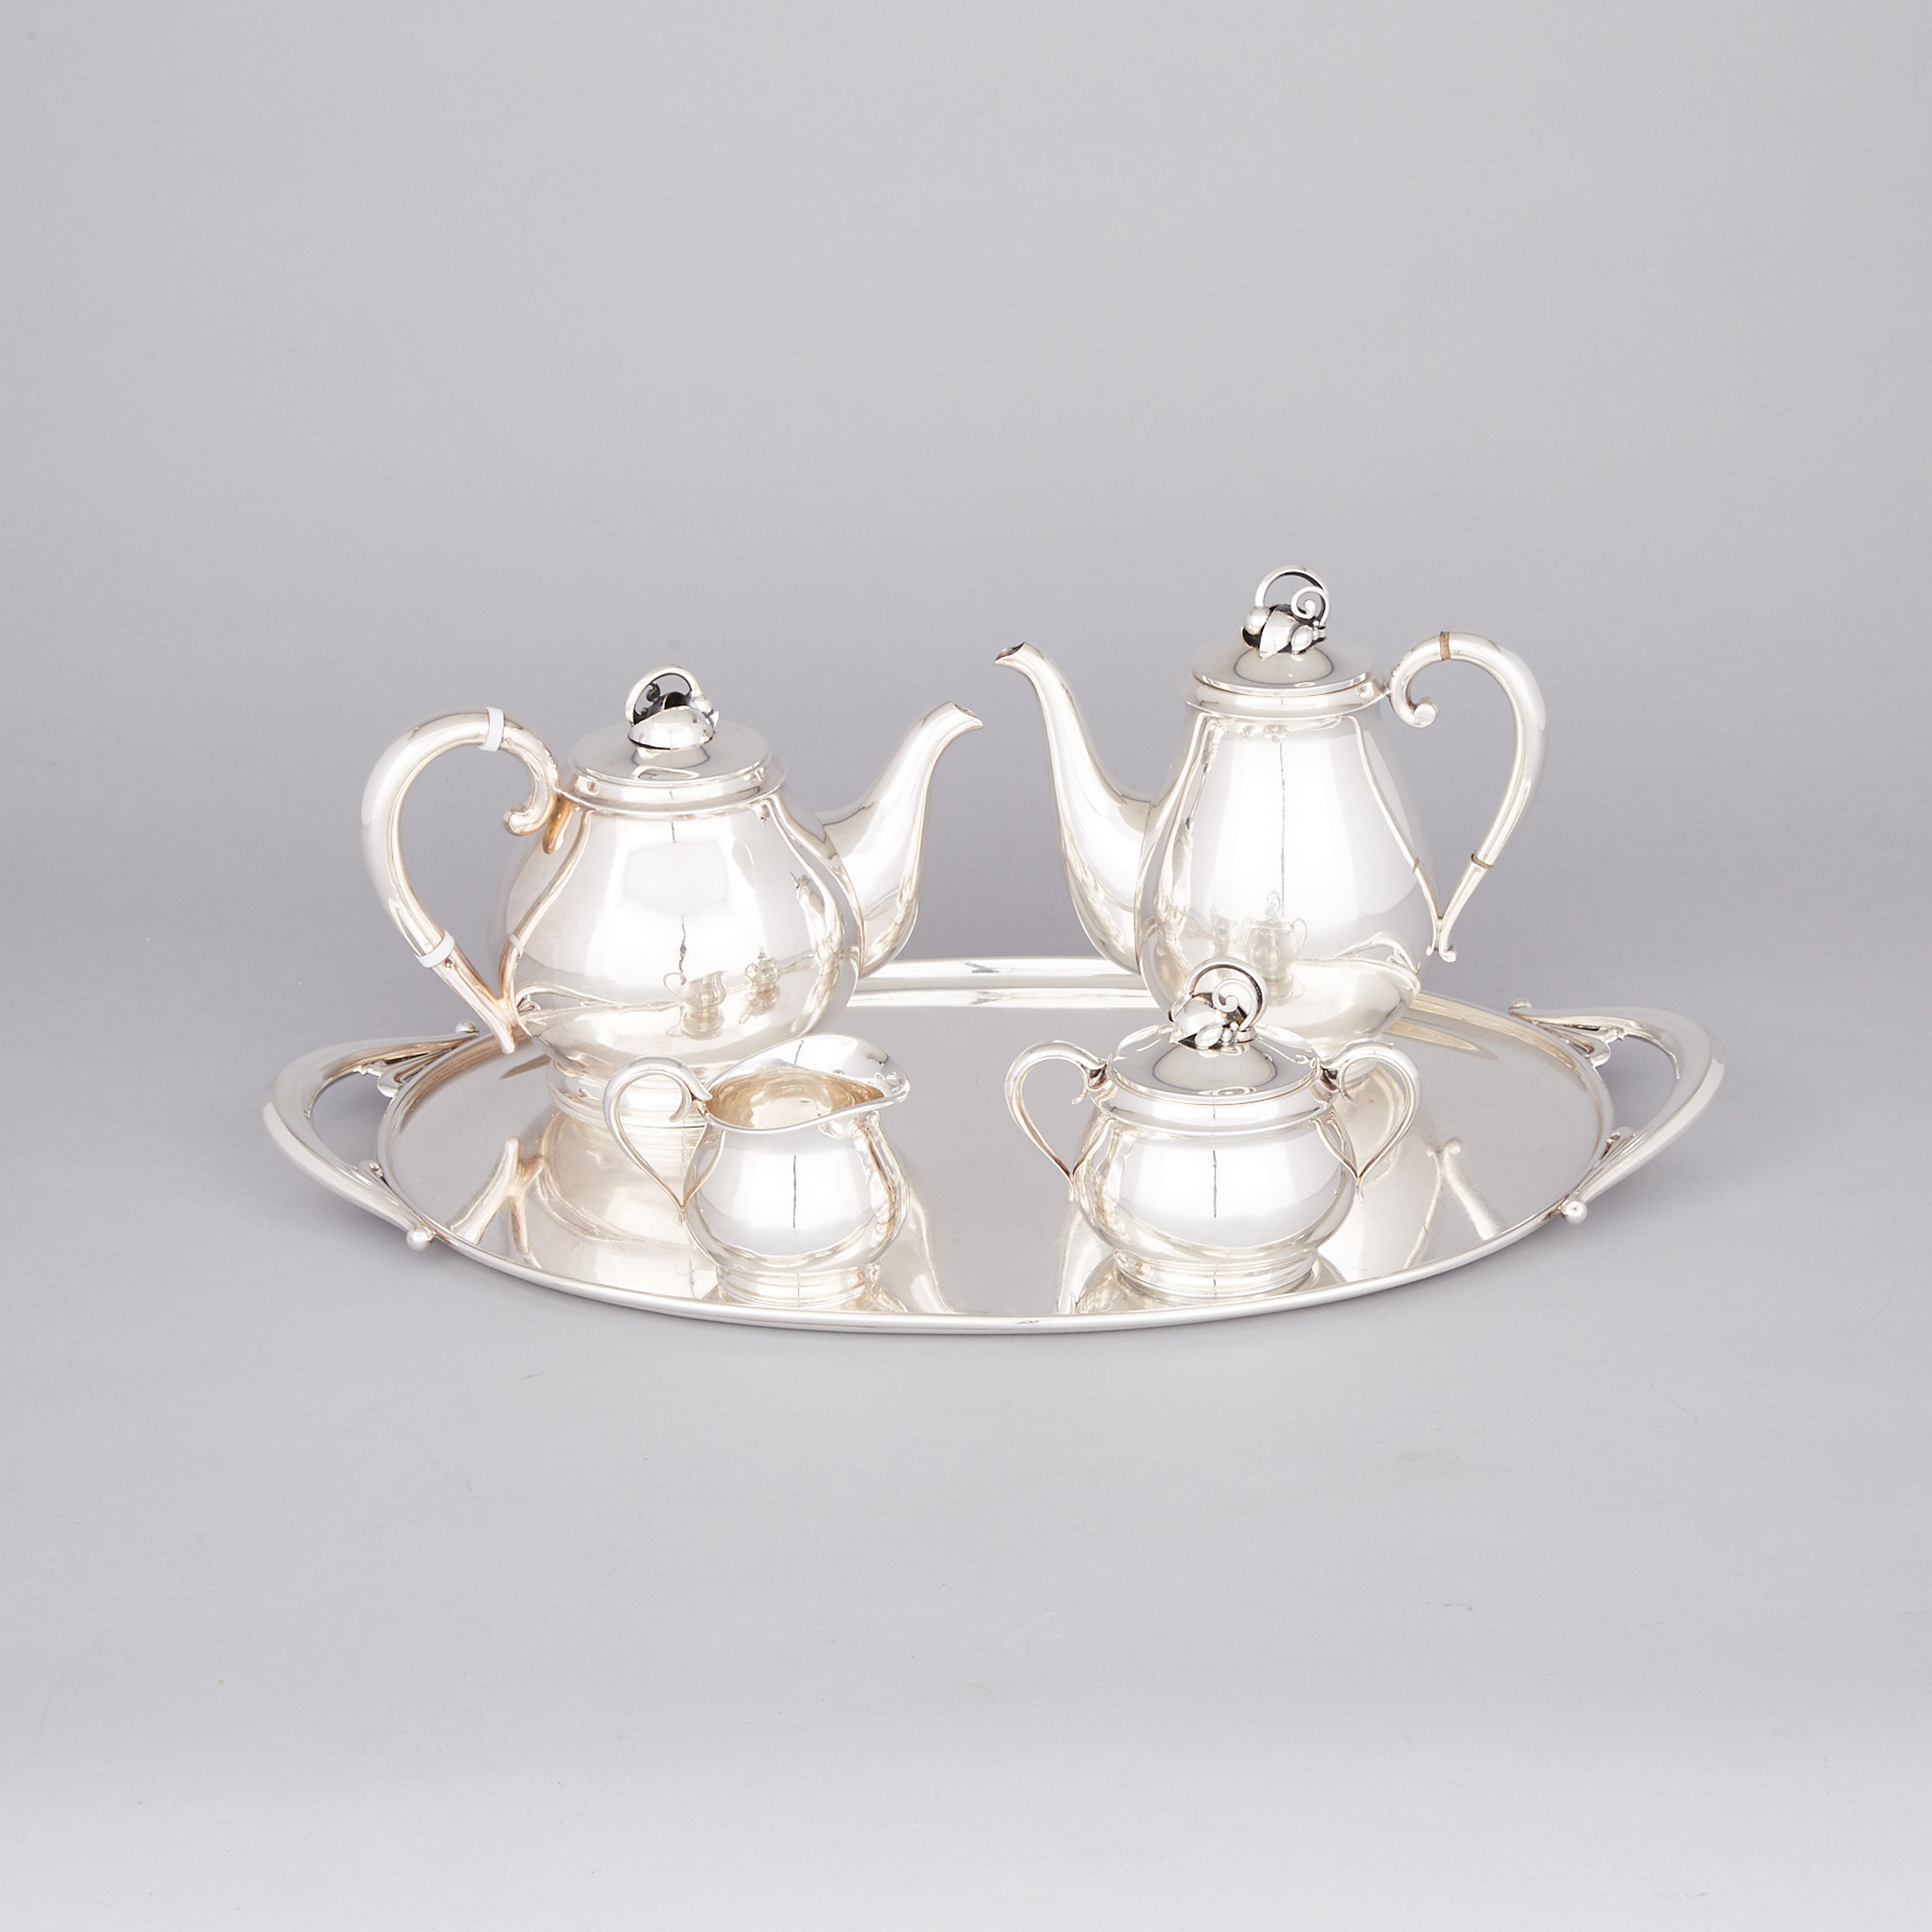 Danish Silver Tea and Coffee Service, Holger Rasmussen, Copenhagen, mid-20th century